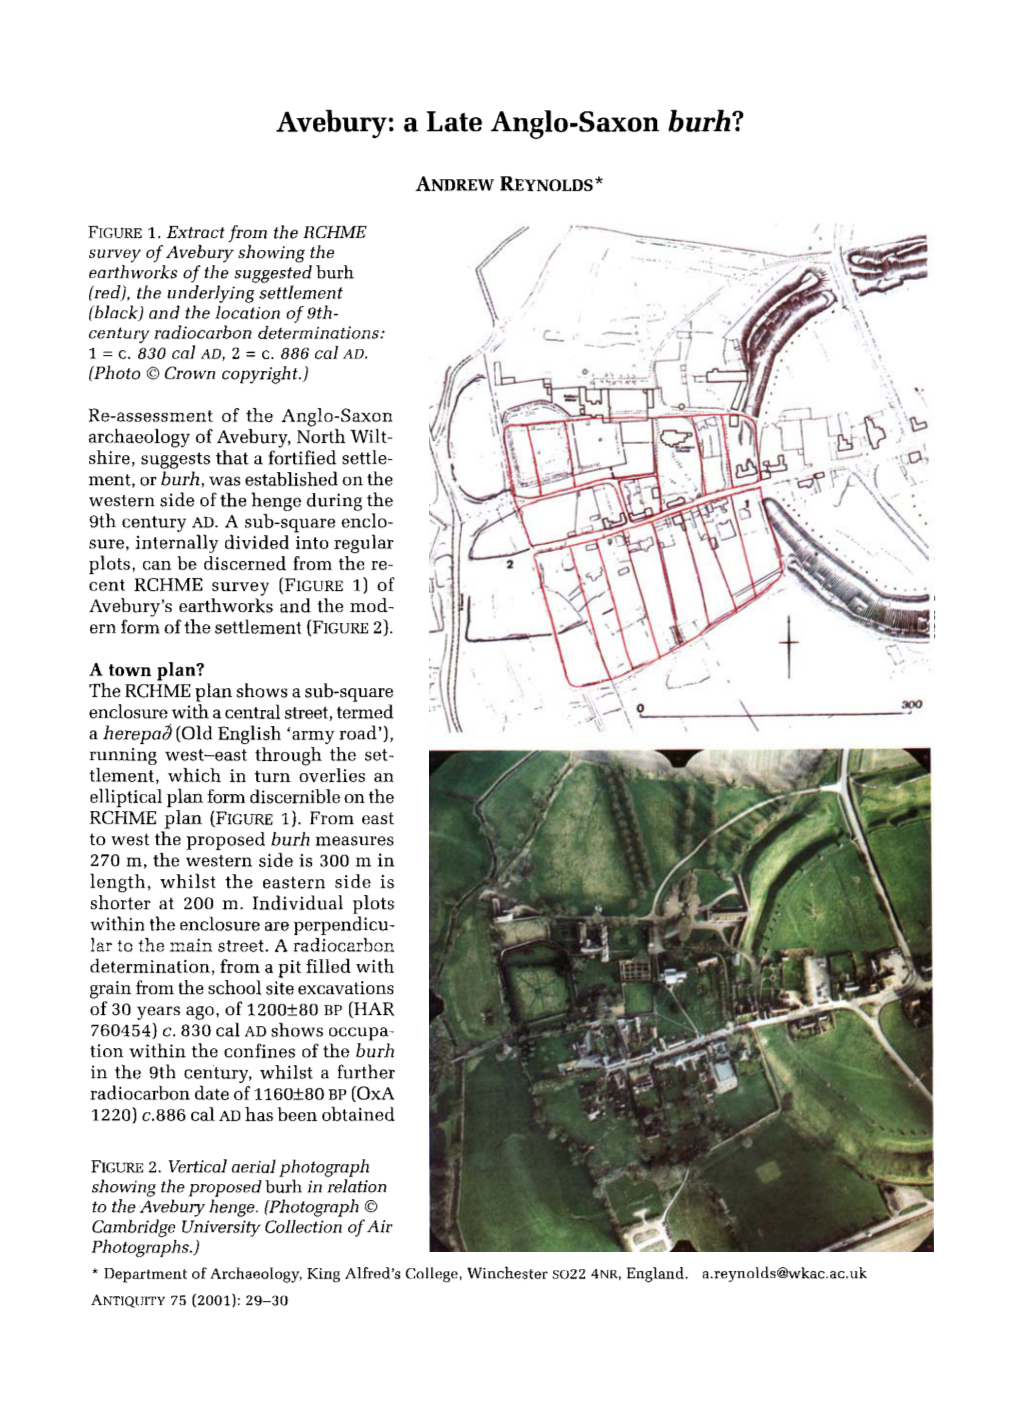 Avebury: a Late Anglo-Saxon Burh?